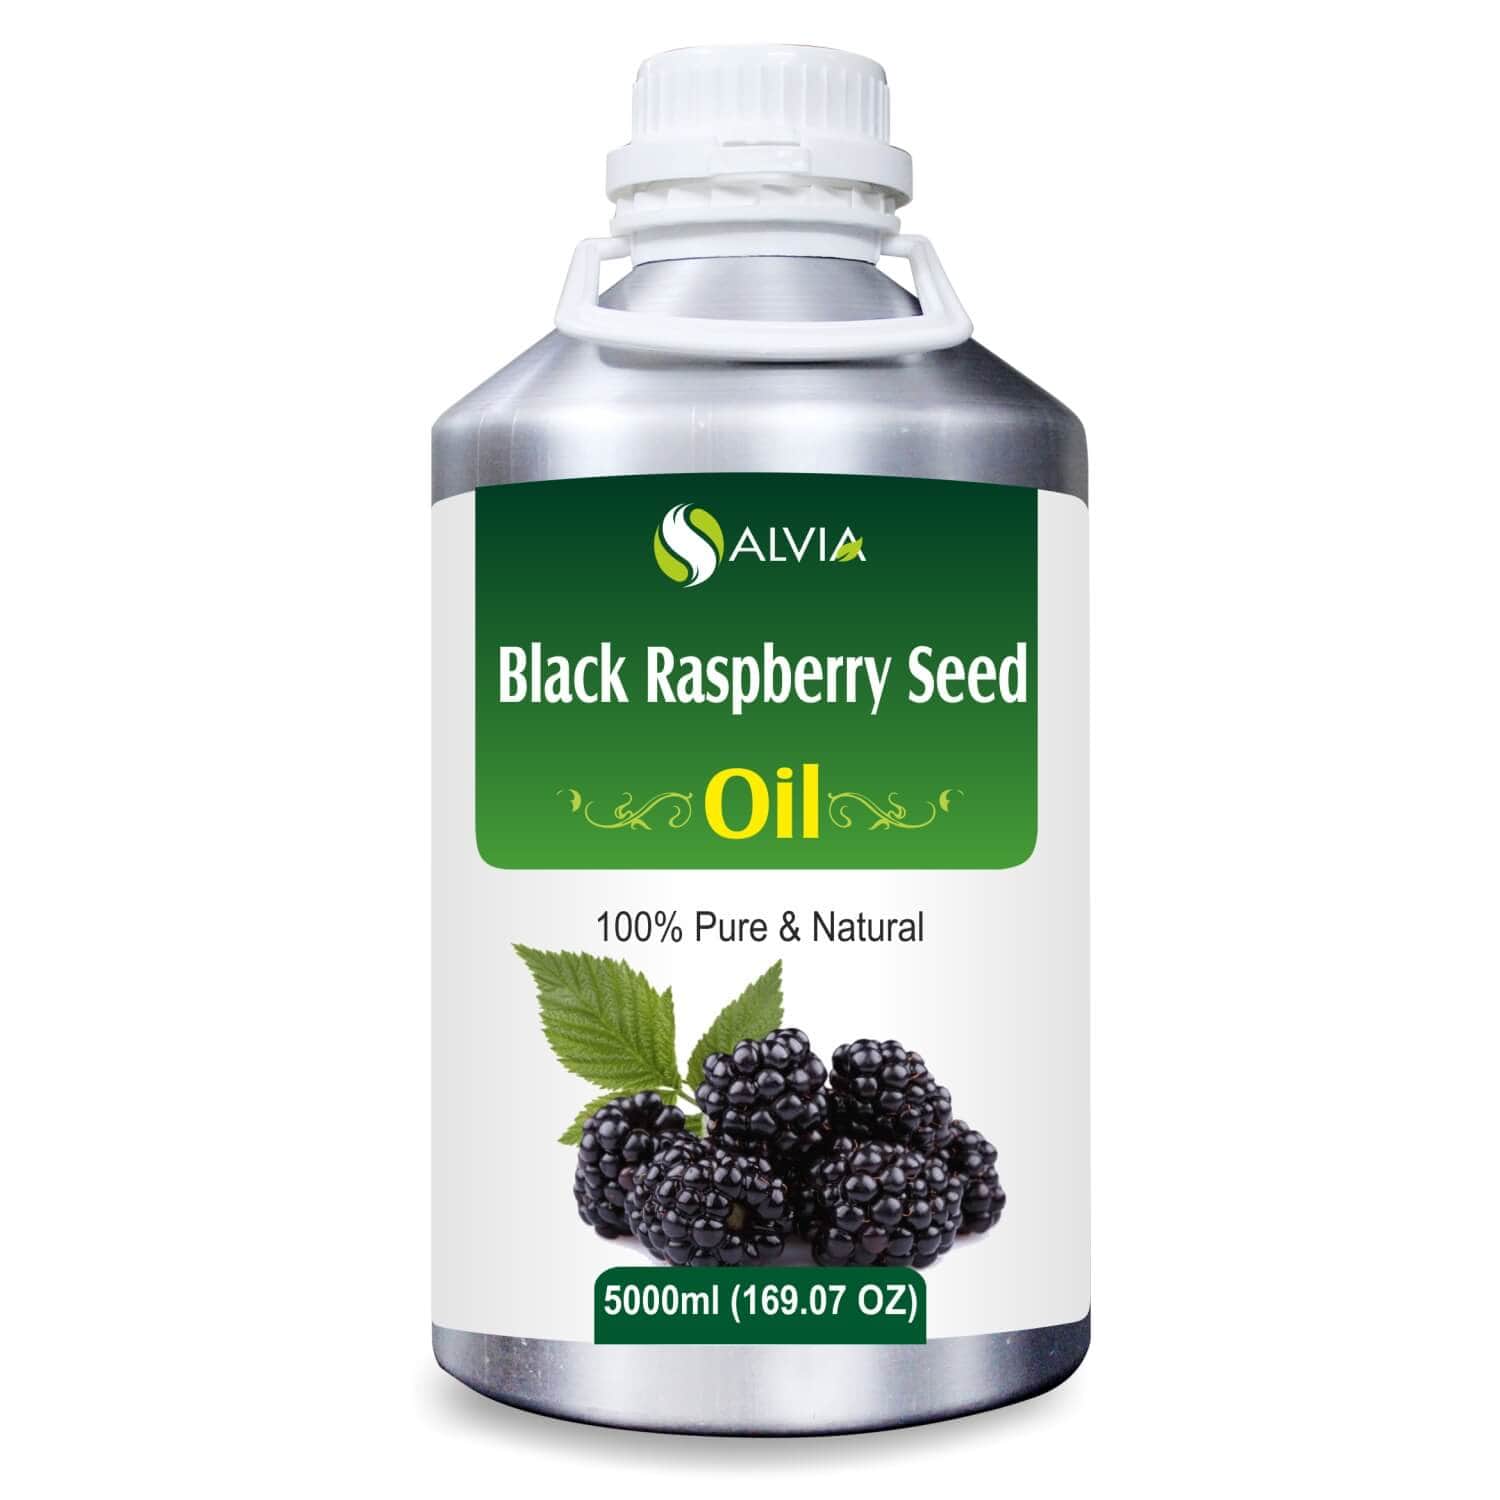 Salvia Natural Carrier Oils 5000ml Black Raspberry Seed Oil (Rubus Occidentalis) Carrier Oil